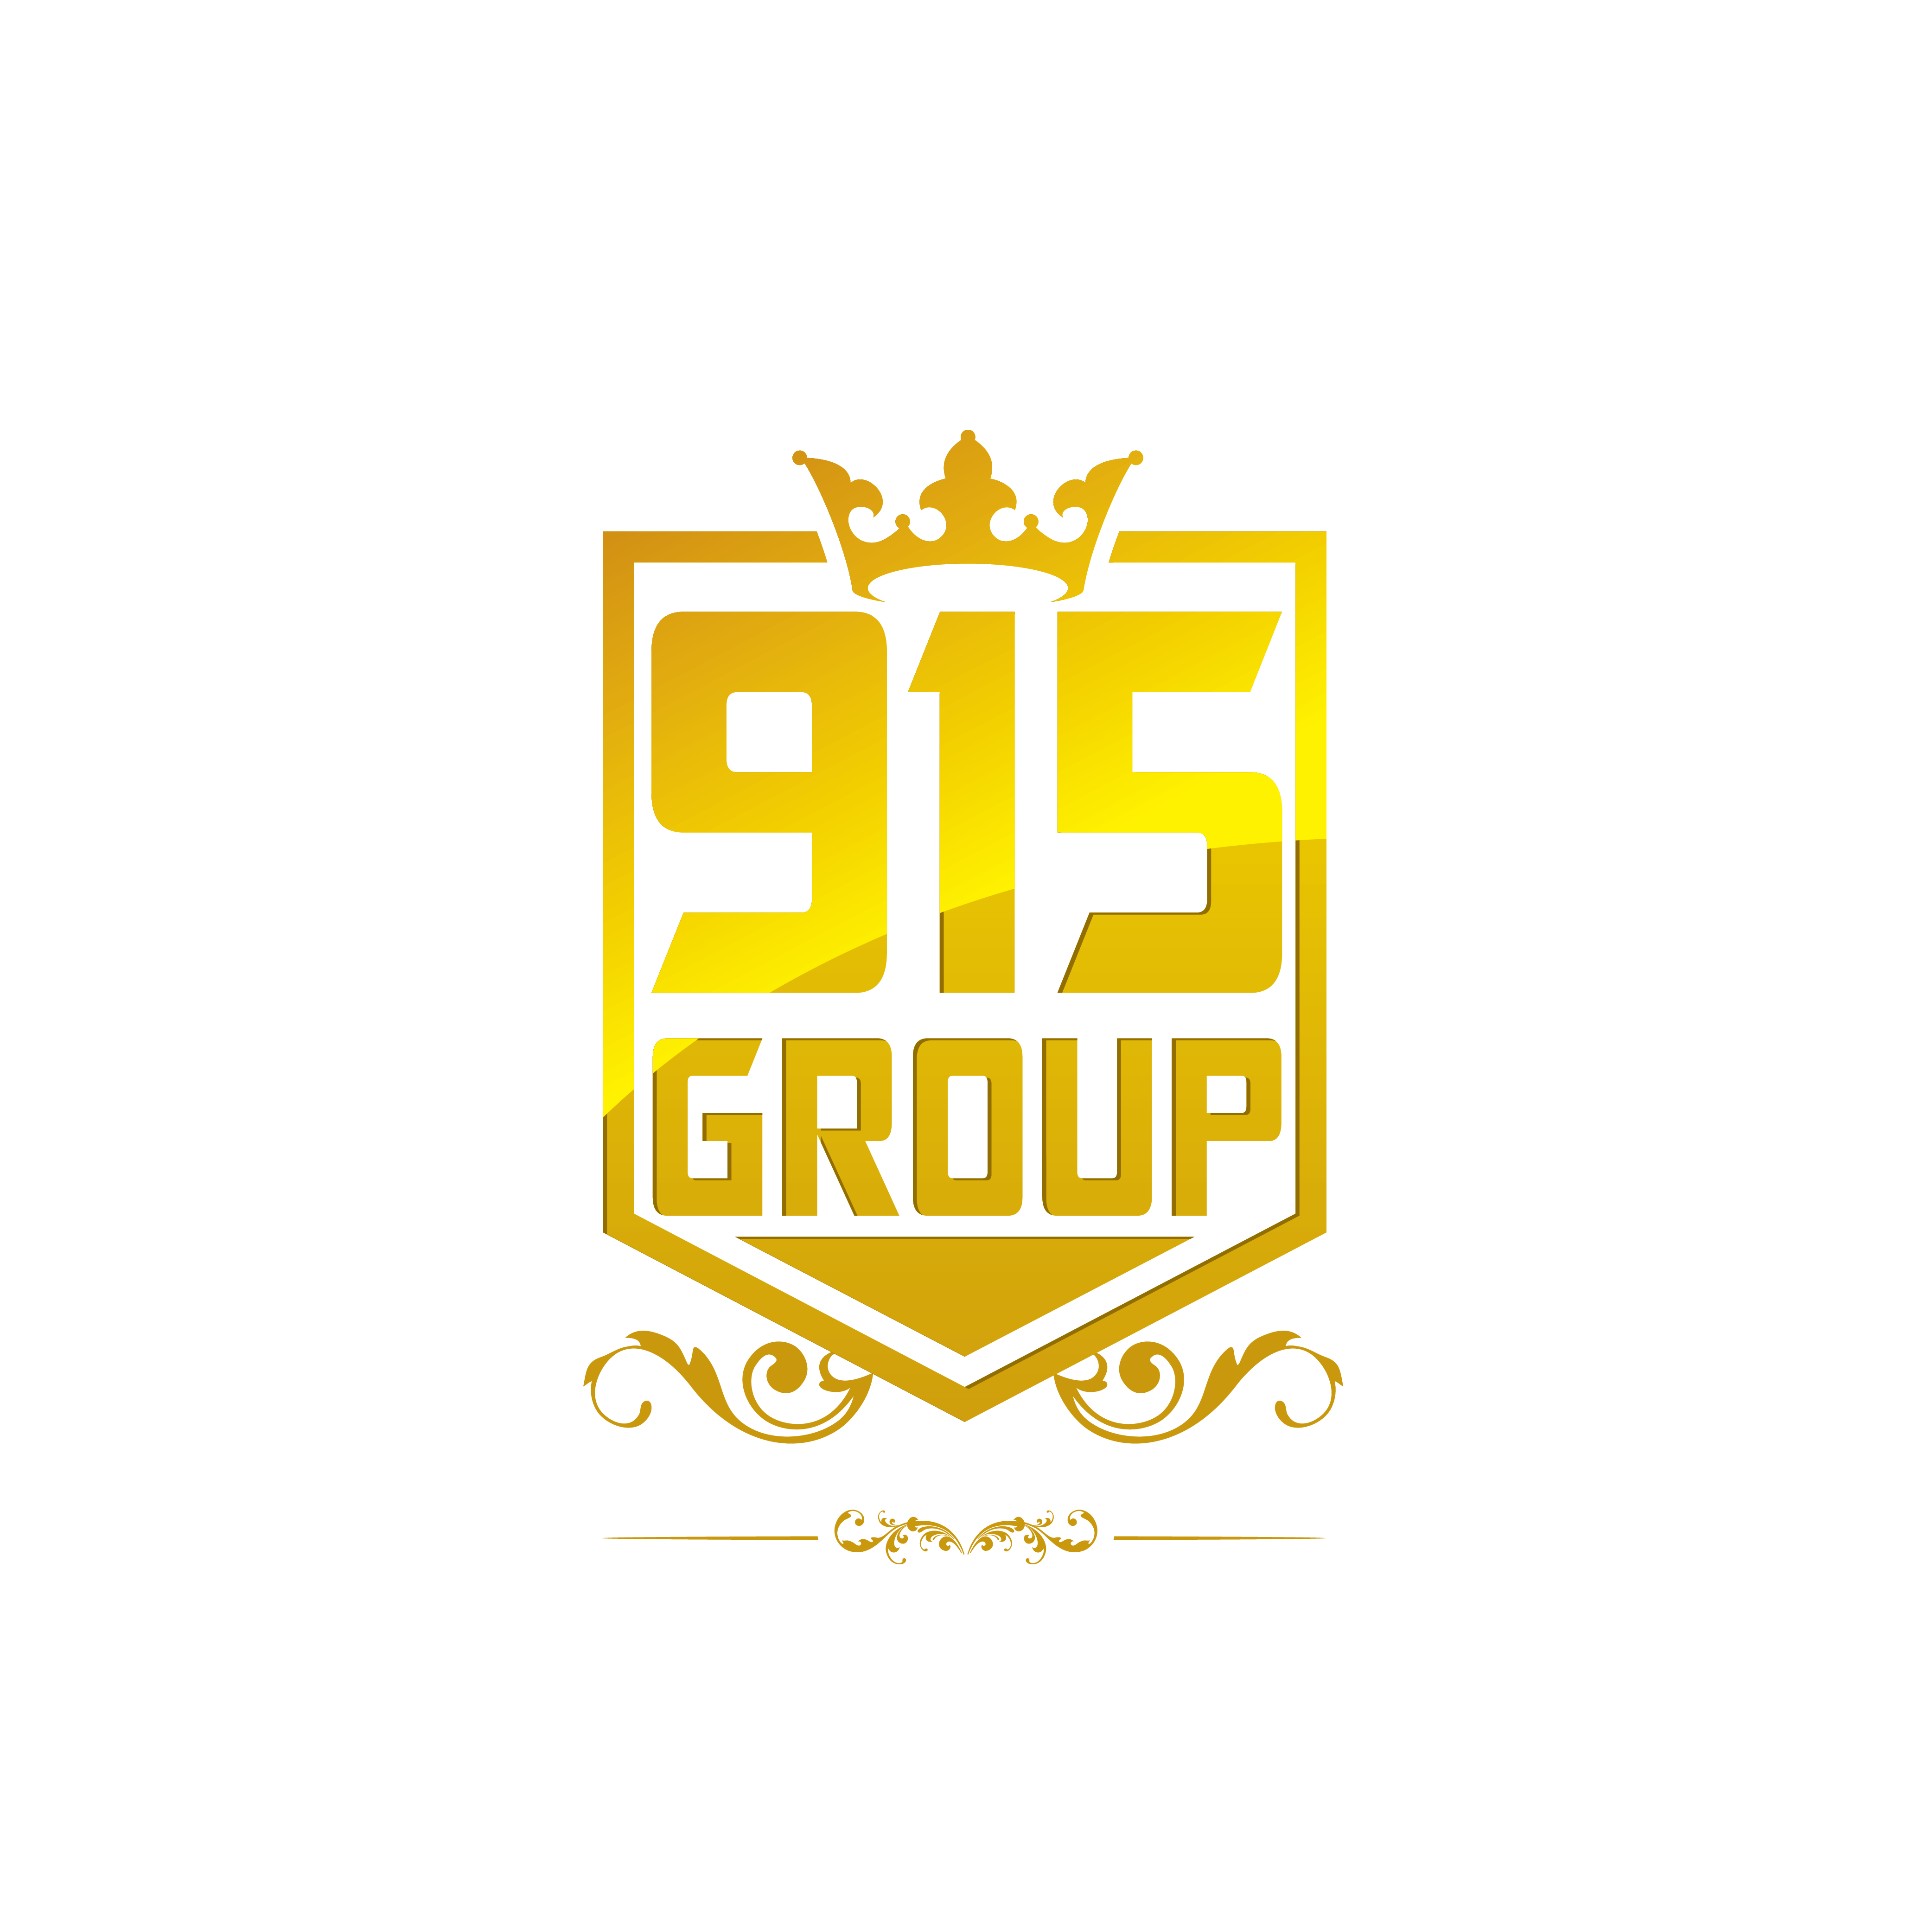 915group